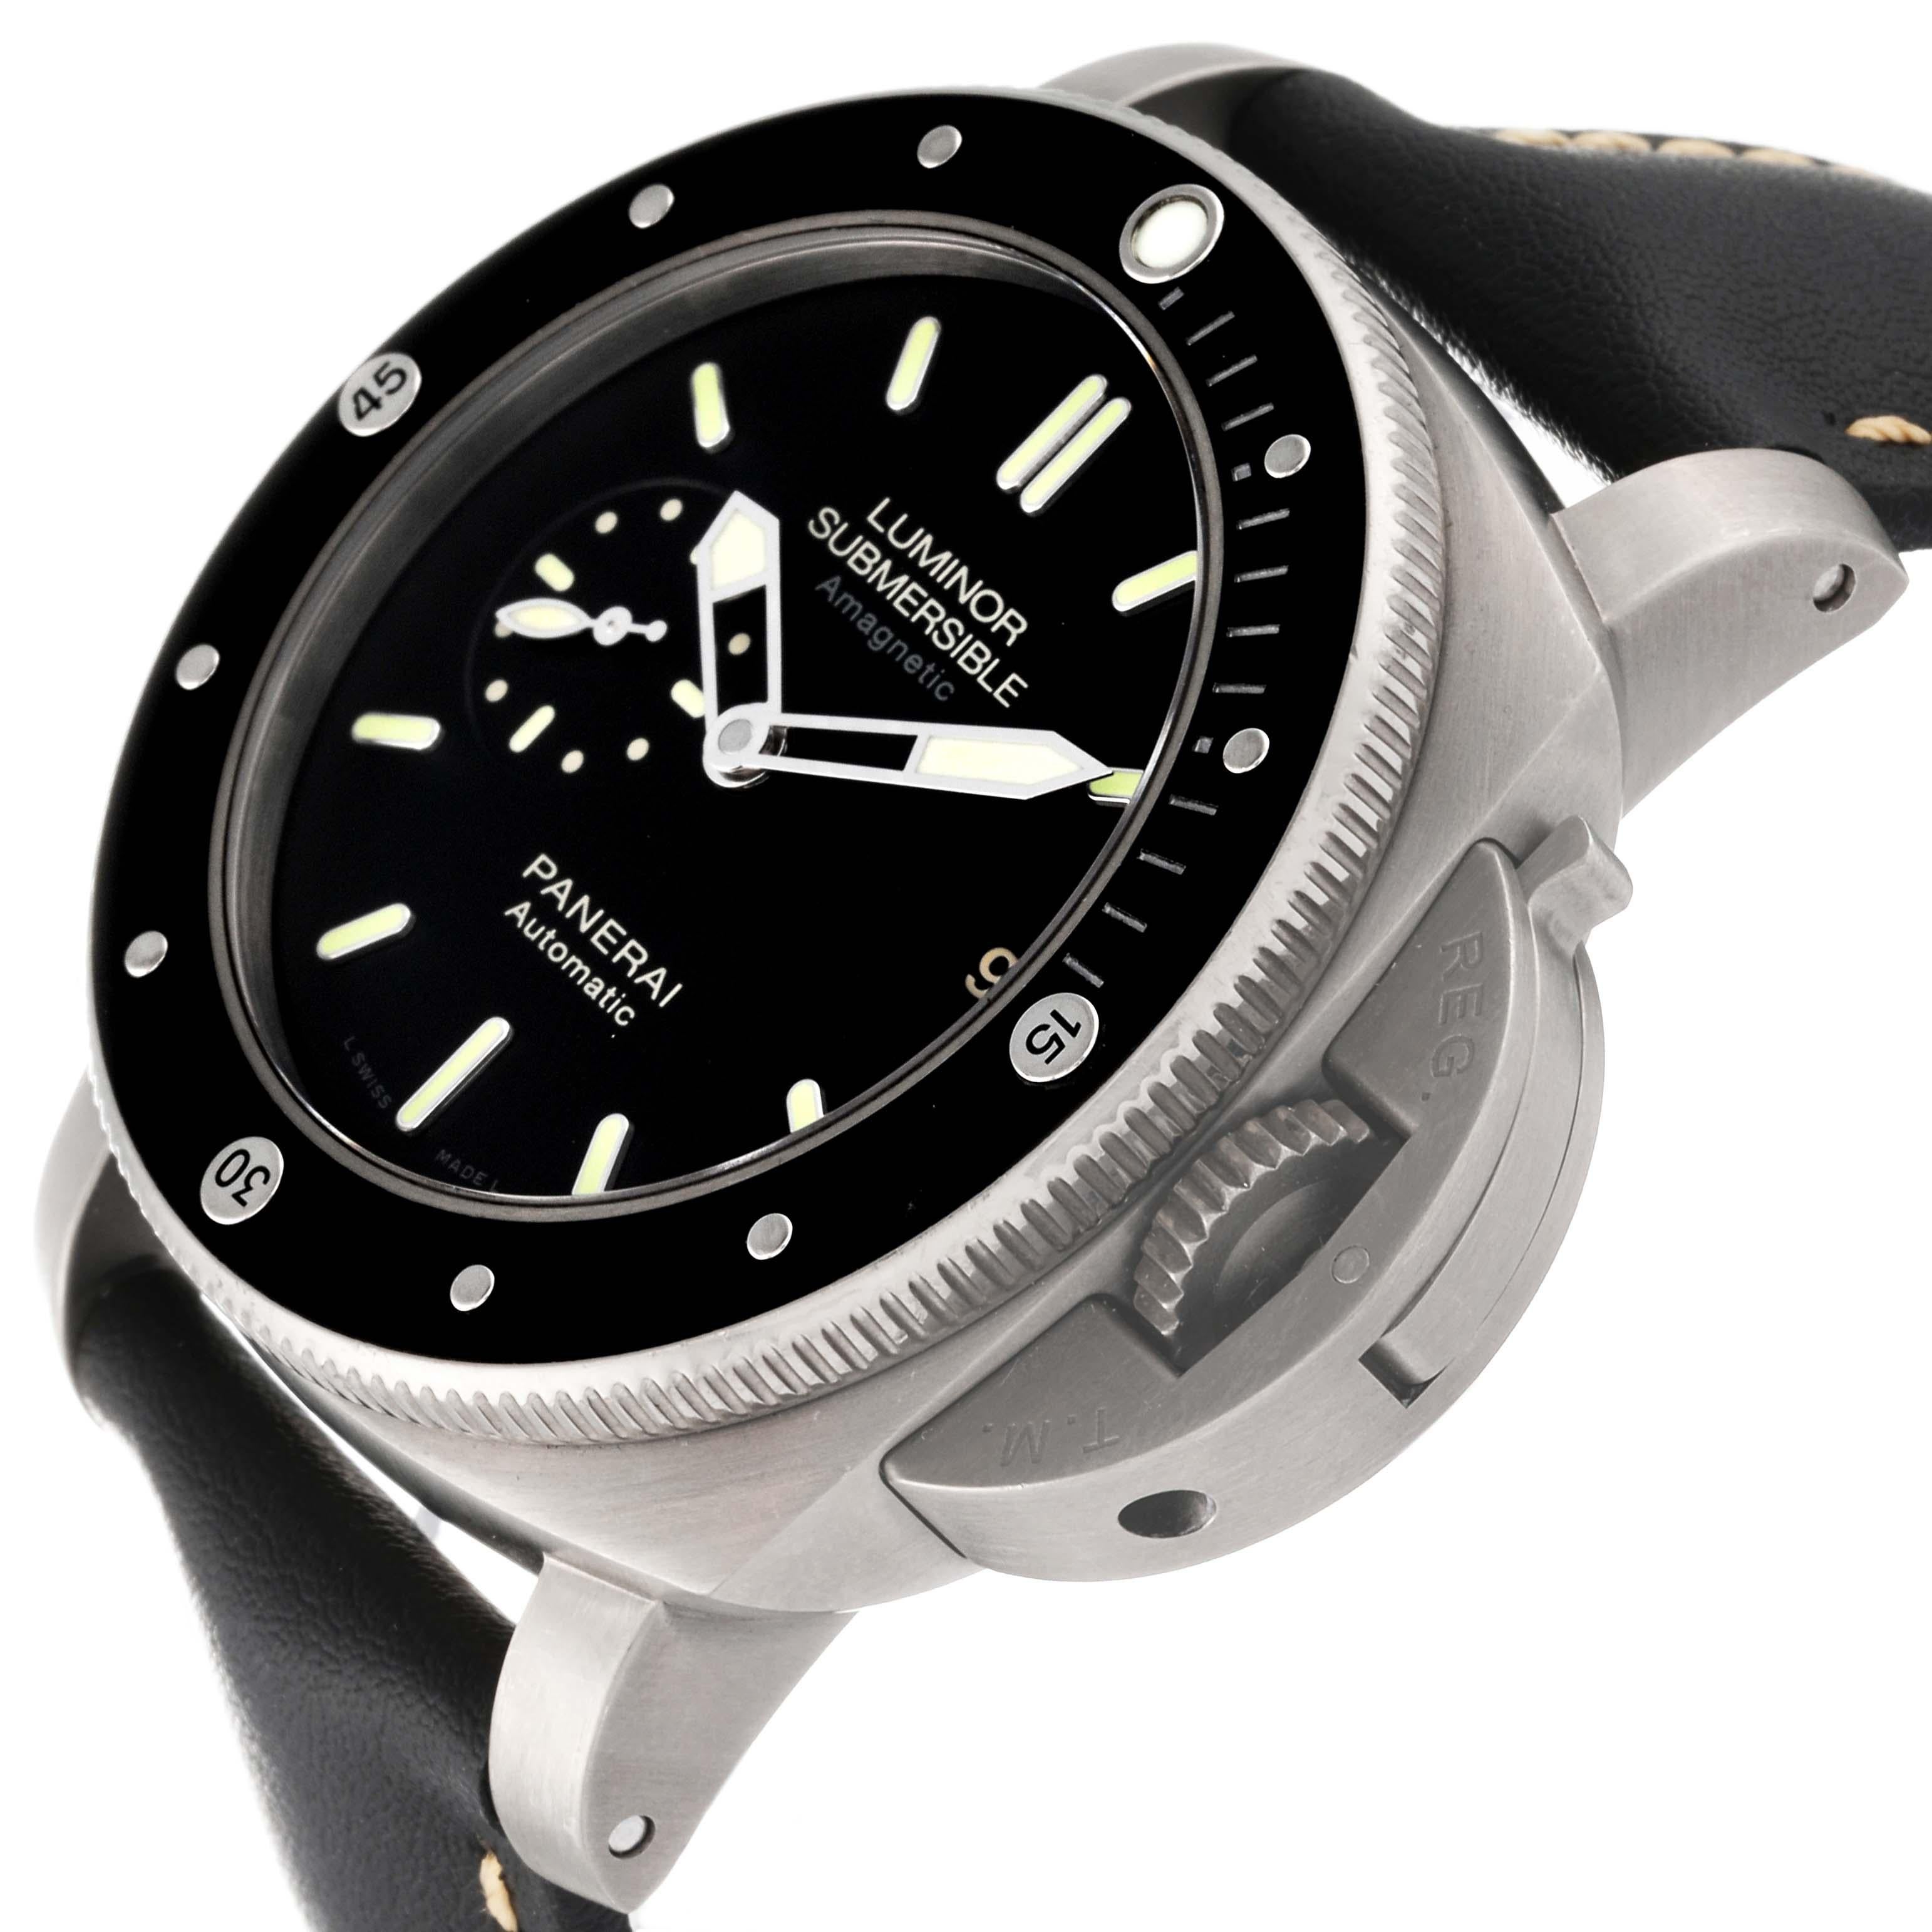 Men's Panerai Luminor Submersible 1950 Titanium Amagnetic Watch PAM00389 Box Papers